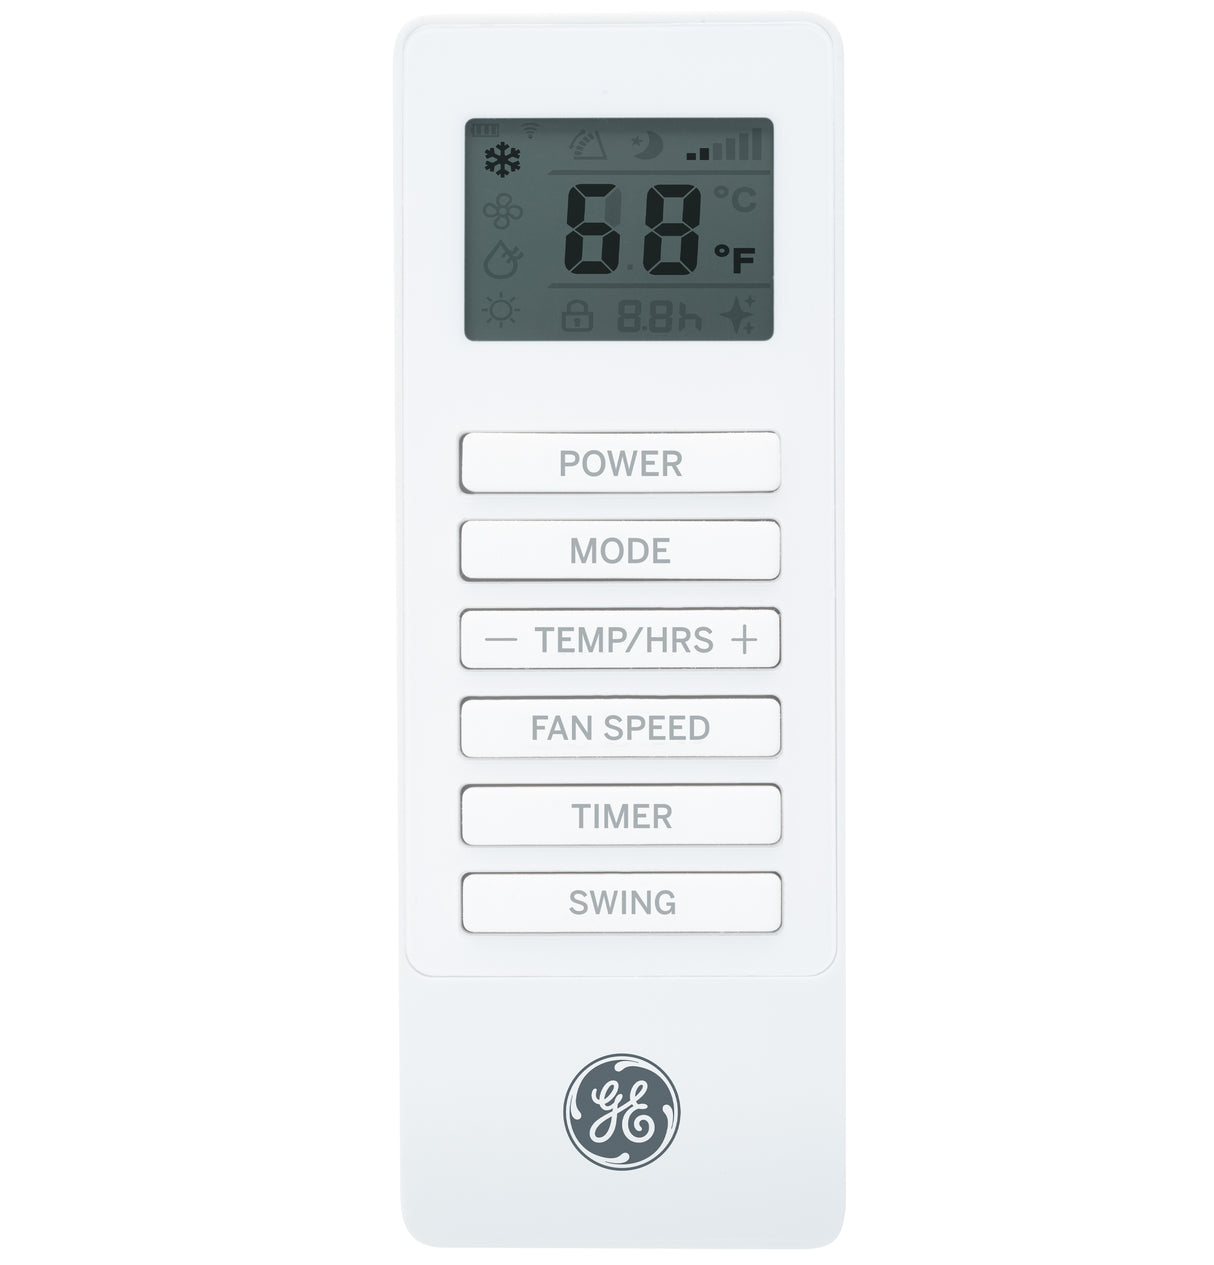 GE(R) 10,000 BTU Portable Air Conditioner for Medium Rooms up to 350 sq ft. (7,200 BTU SACC) - (APCA10YBMW)